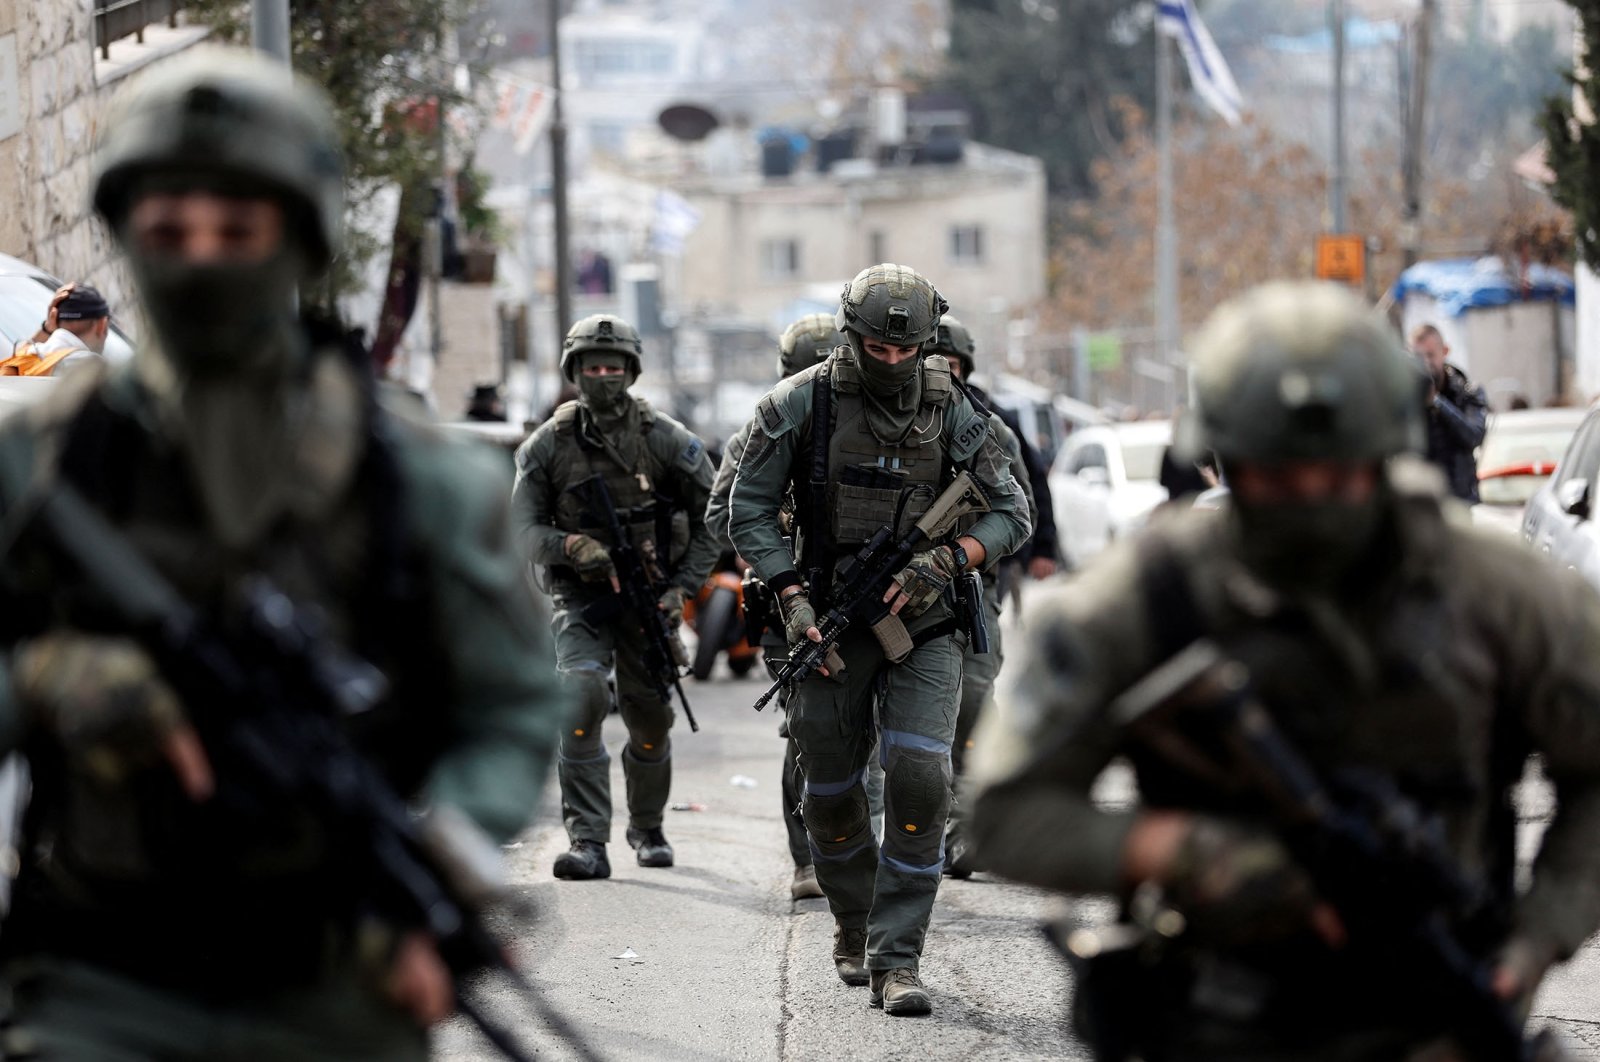 Penyerang remaja melukai 2 orang di Yerusalem, sehari setelah serangan sinagoga